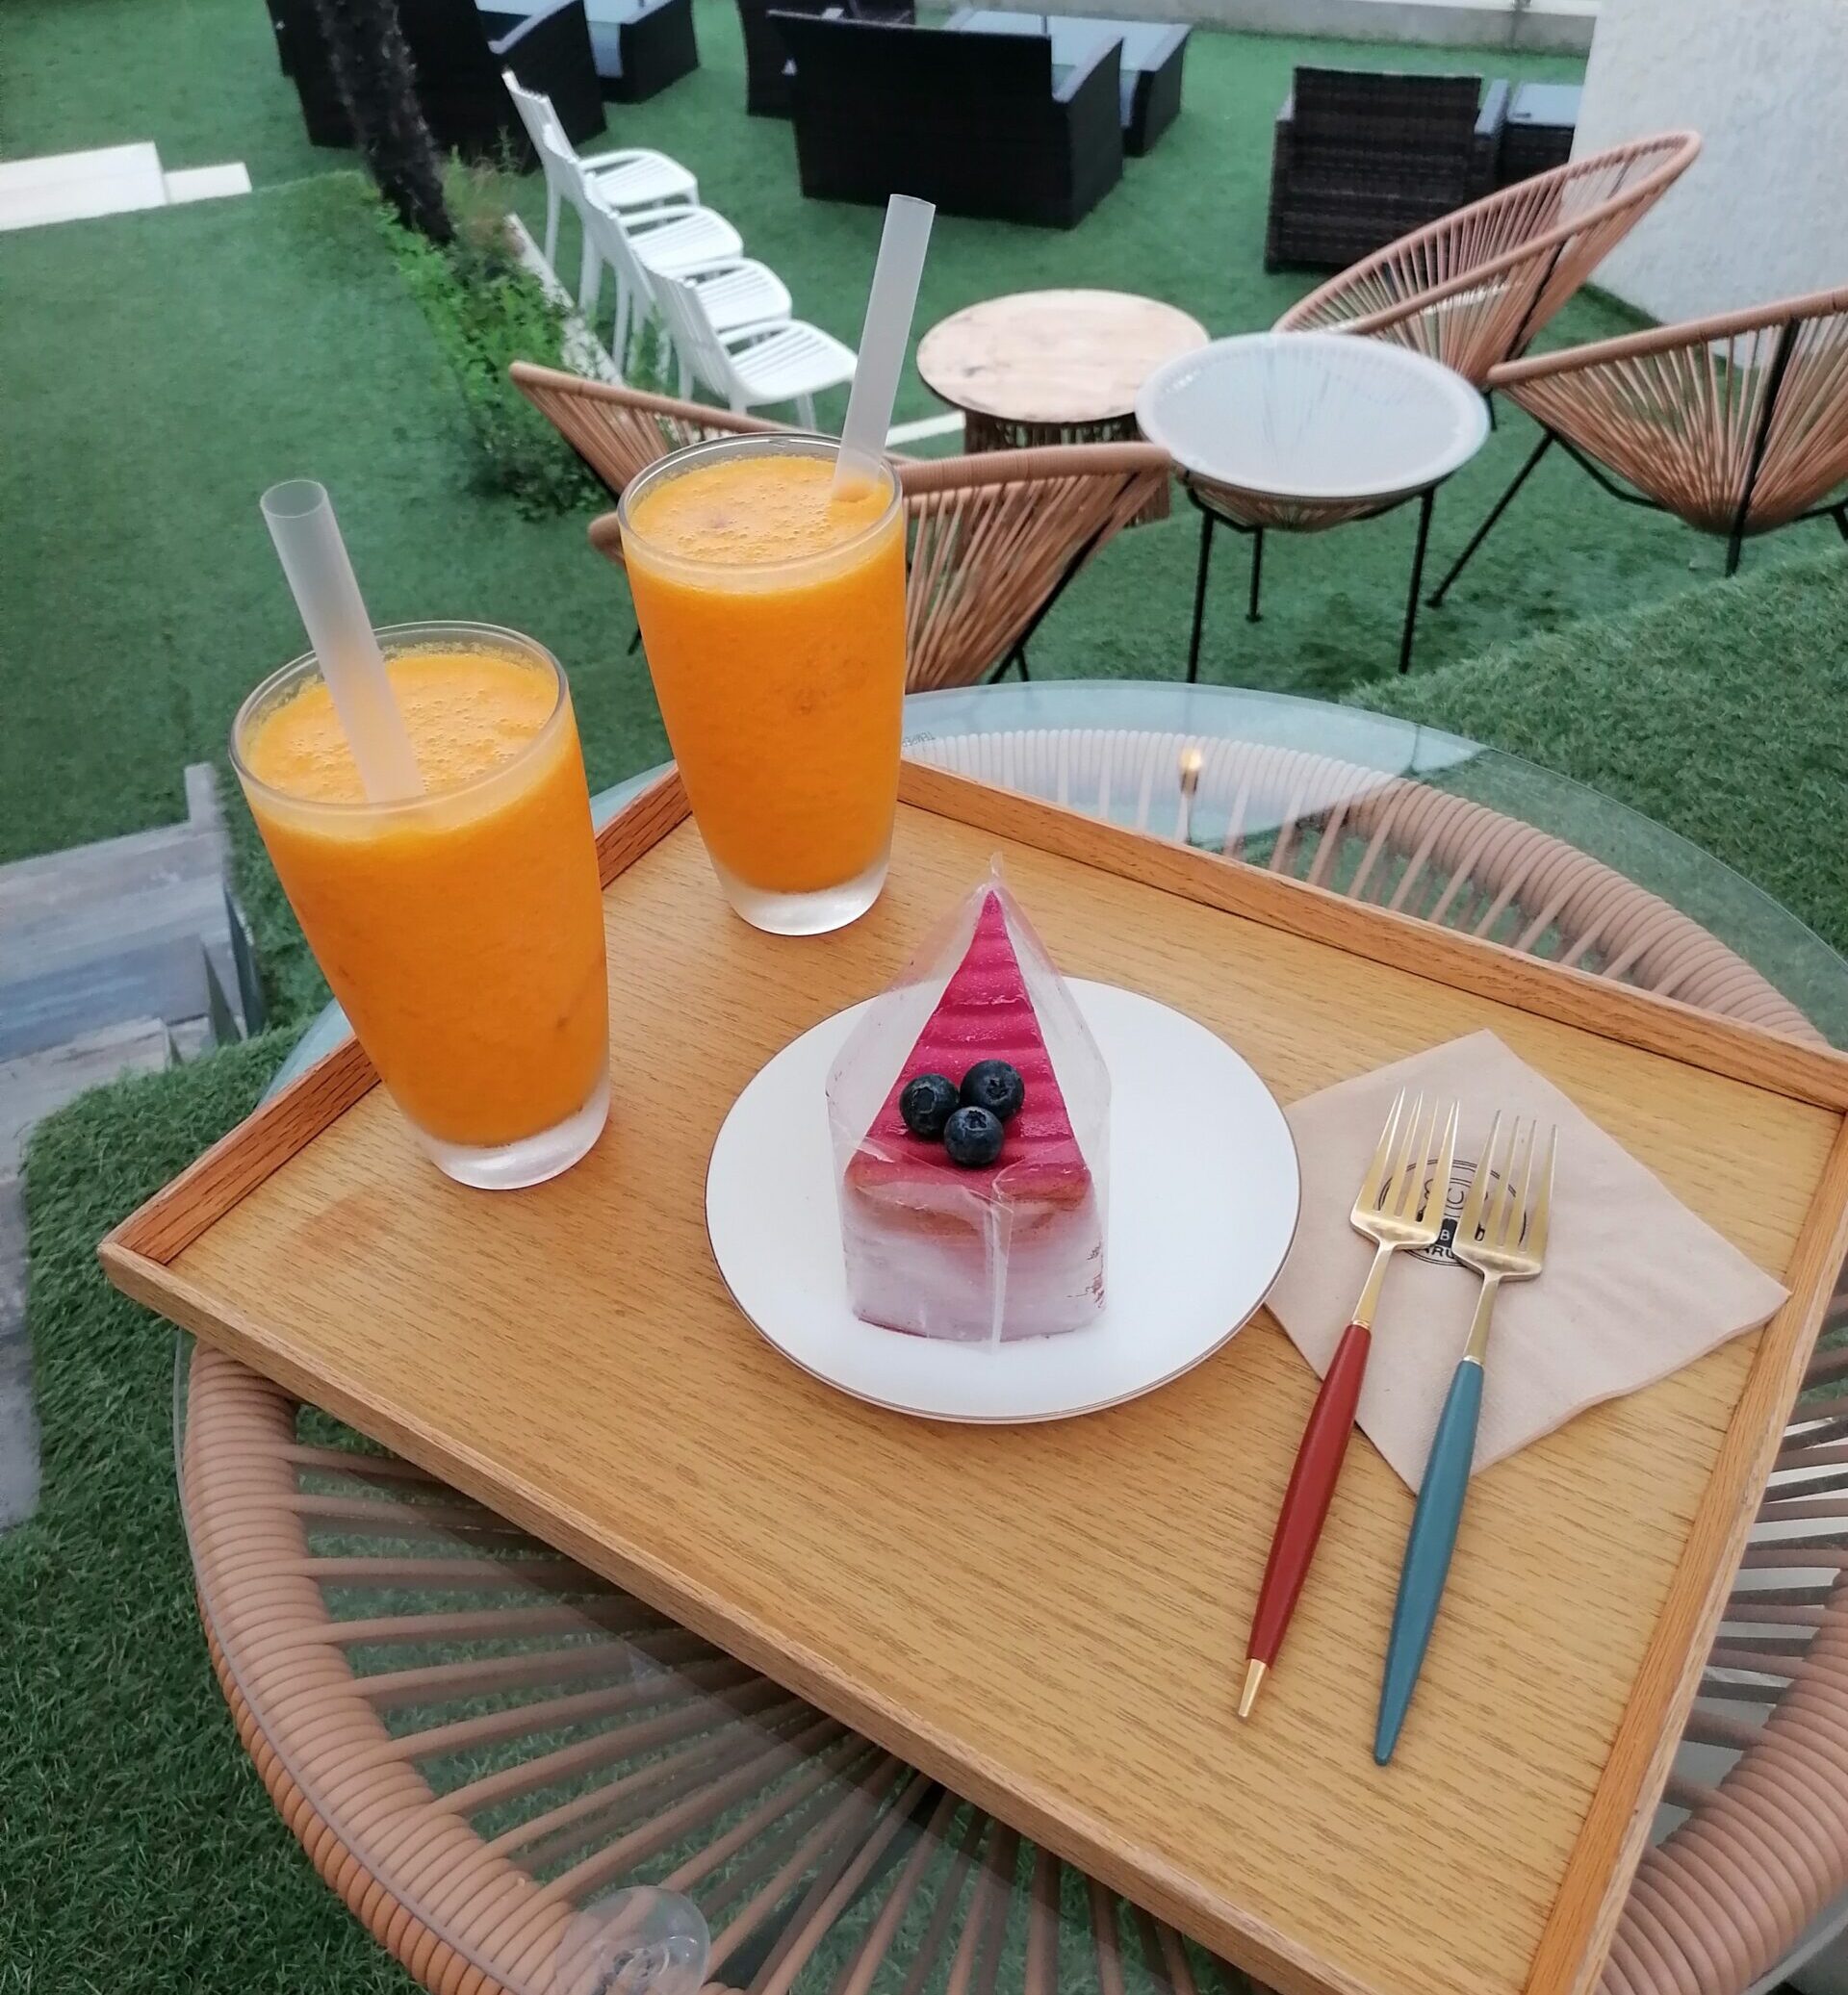 Bild: Jeju Café Mandarinen, Mandarinensaft und Kuchen